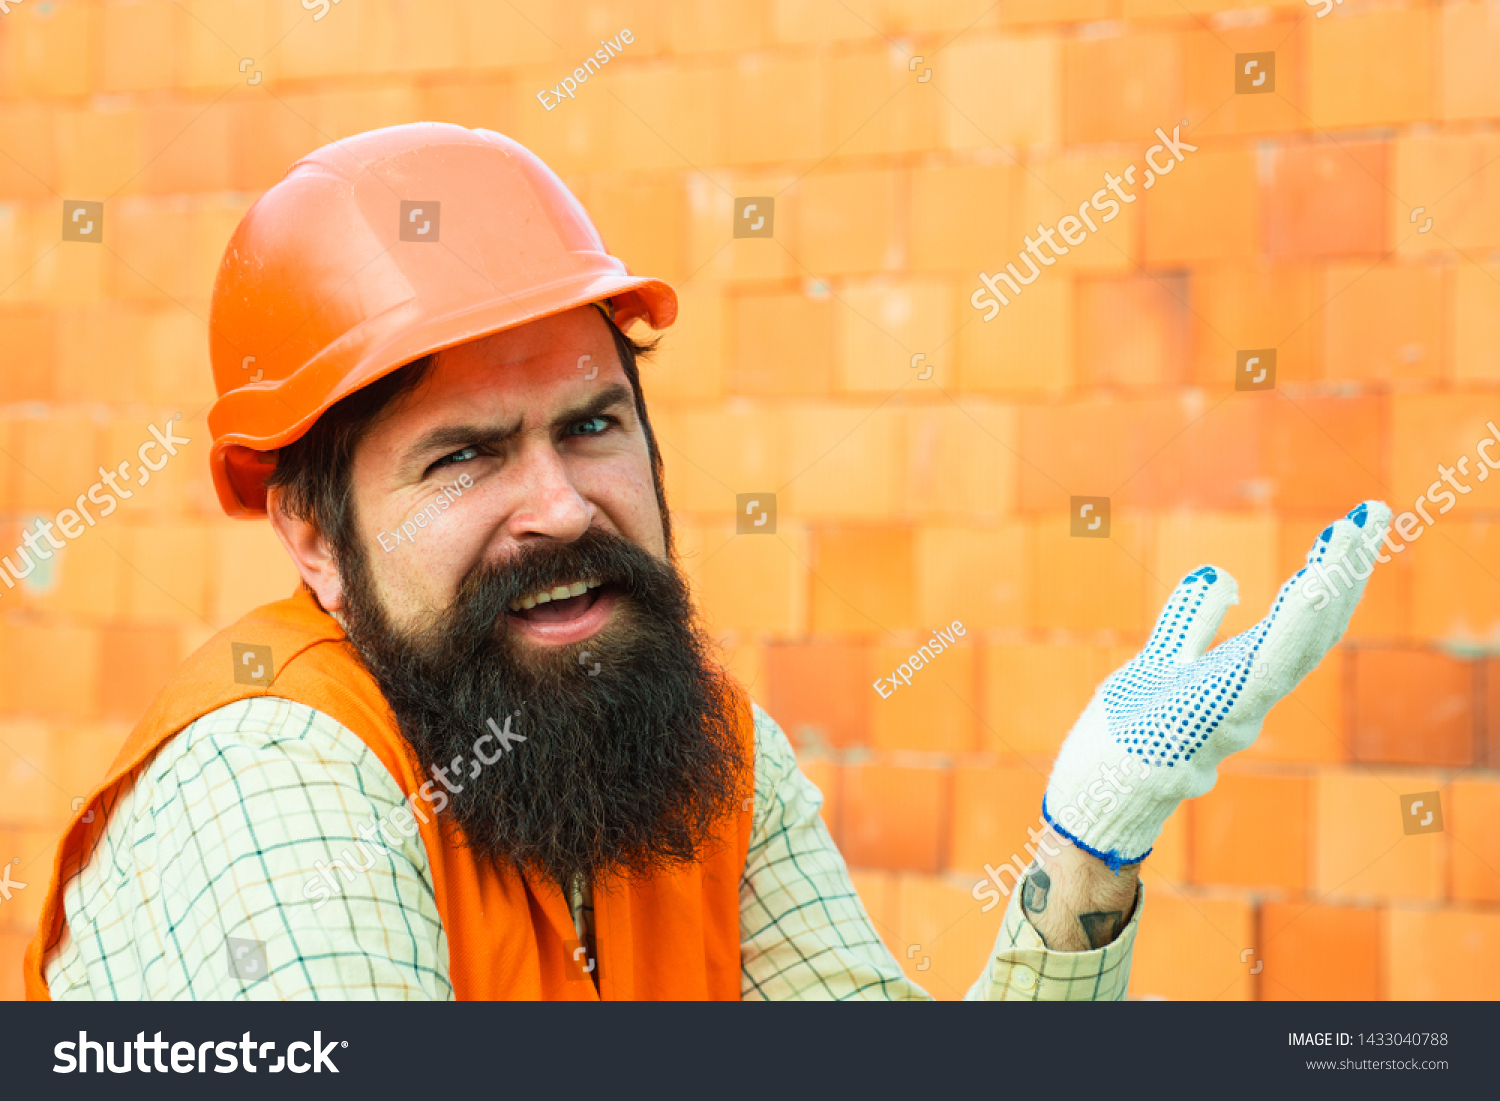 Protest worker. Salary. Unhappy builder. Disturbance. Sad employee. #1433040788